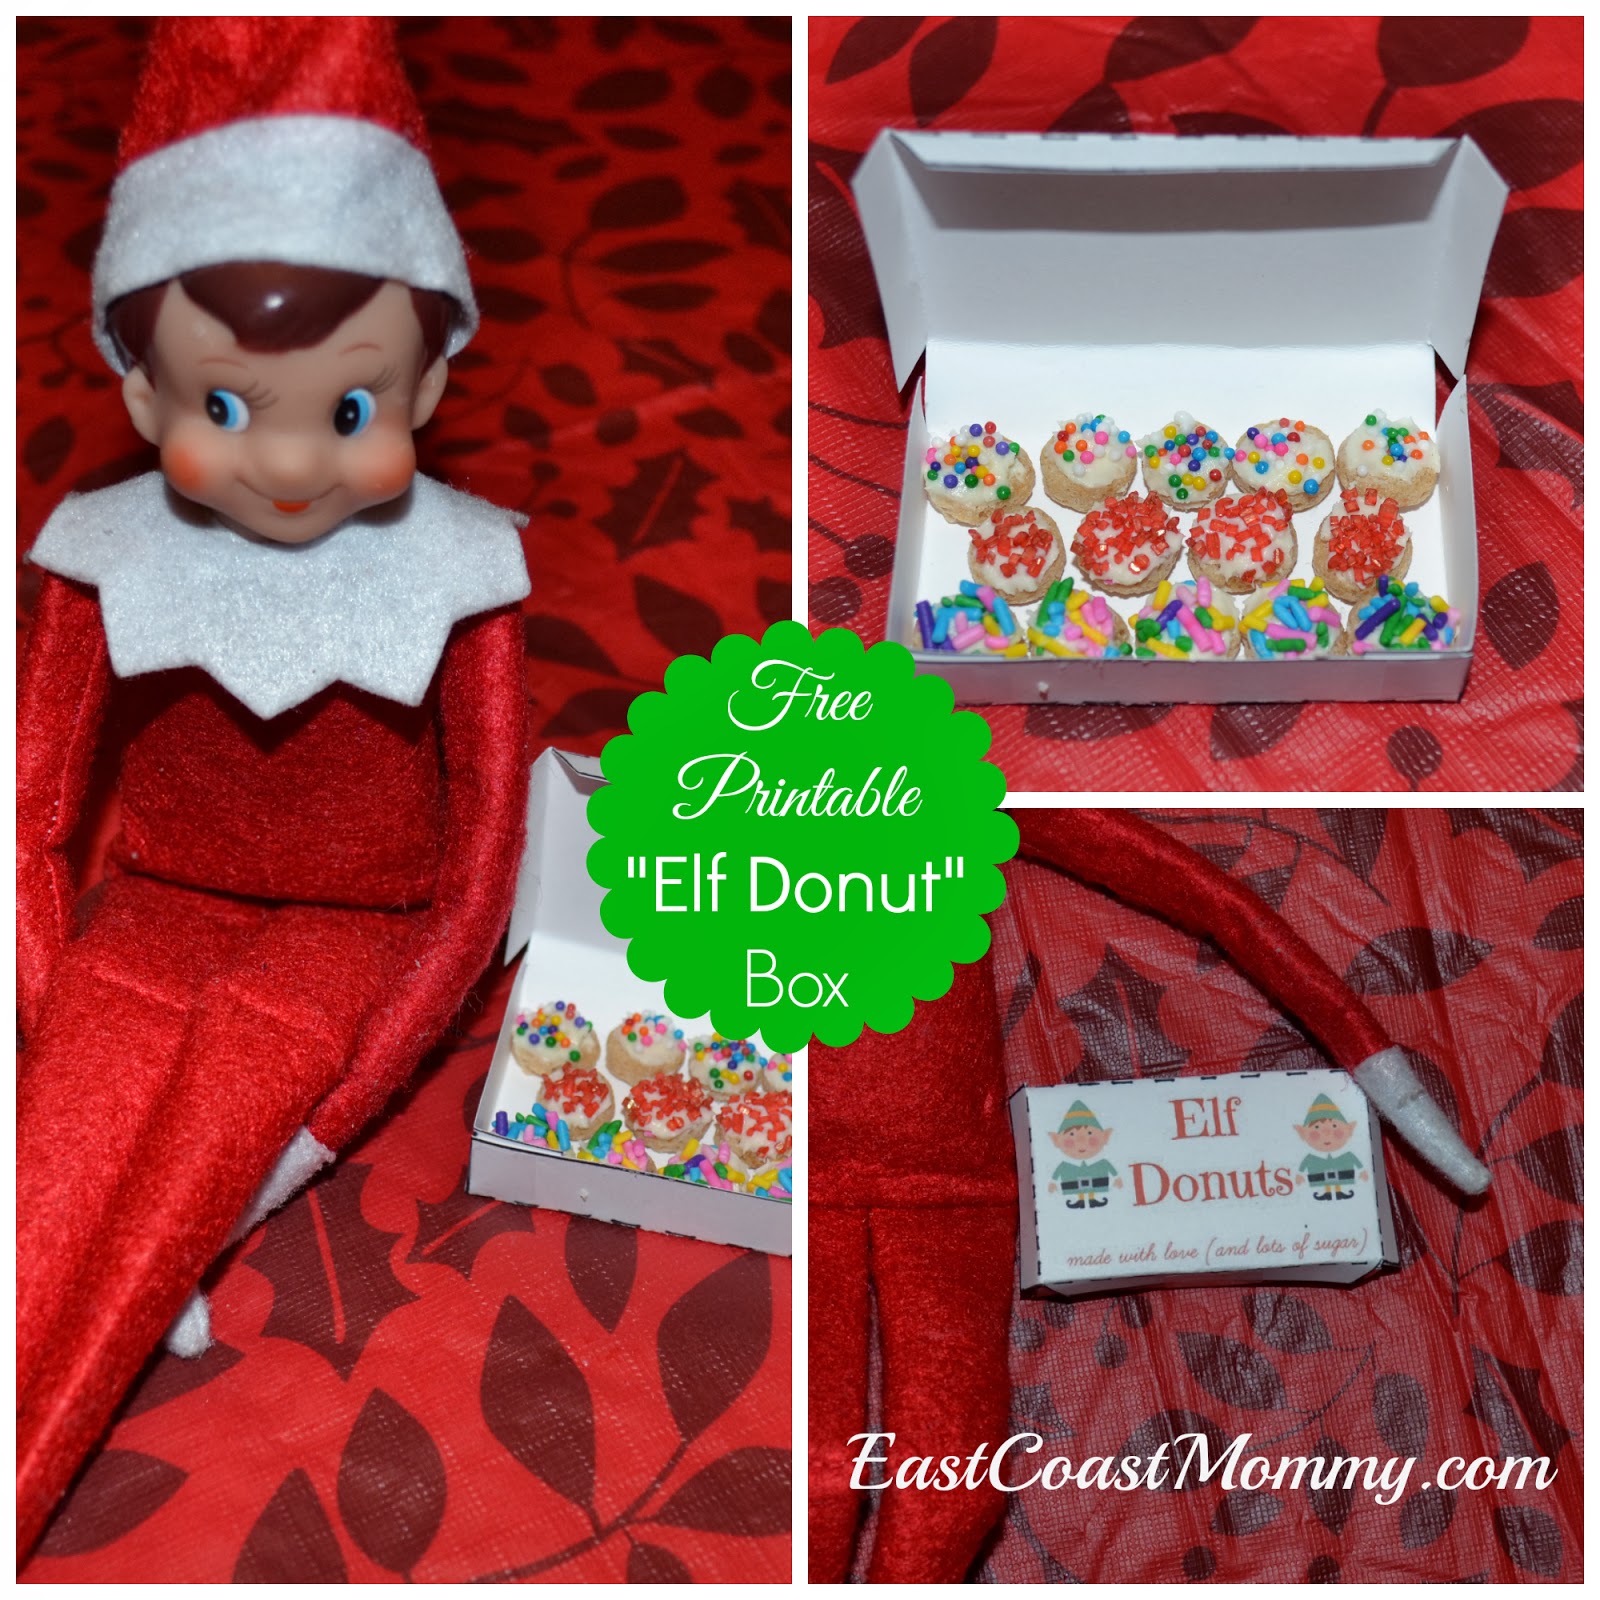 East Coast Mommy: Elf on the Shelf Donuts free printable box